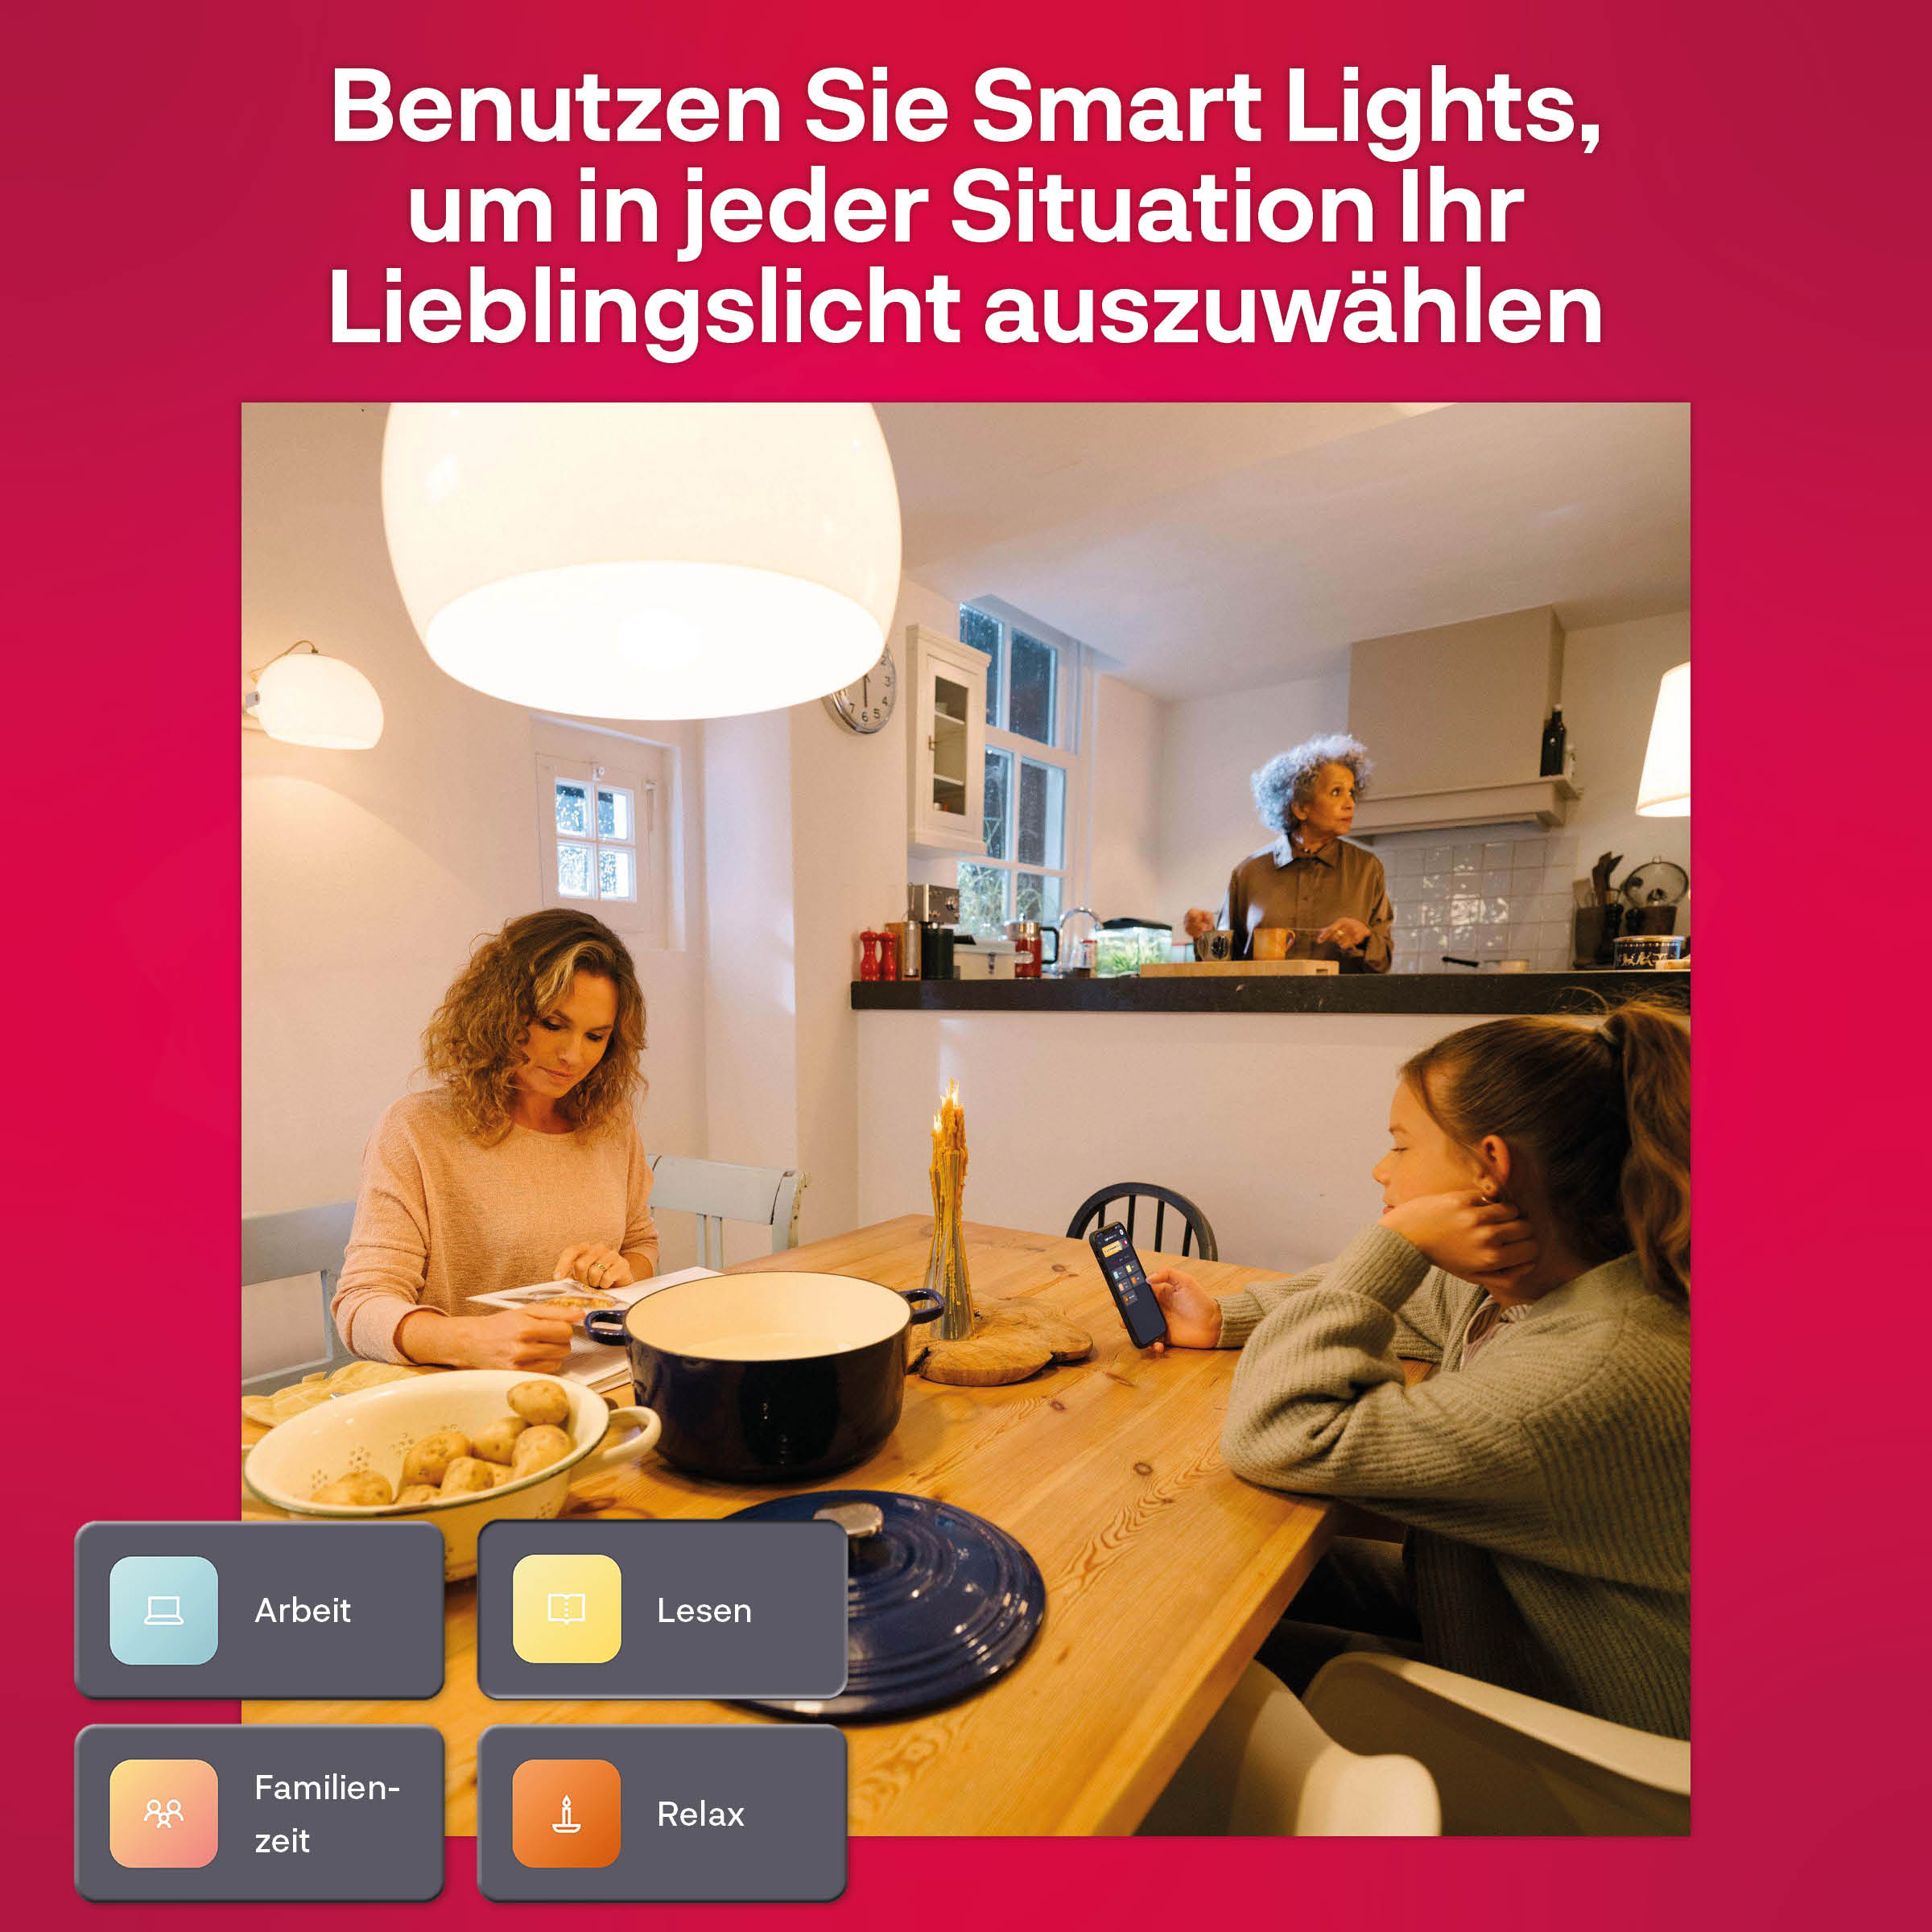 Kompatibel LED, Lampe T-2 Tunable, Alexa, INNR & Tunable/Comfort 279 Hue lamp E27 LED Zigbee 2-Pack, RB Philips Smart mit